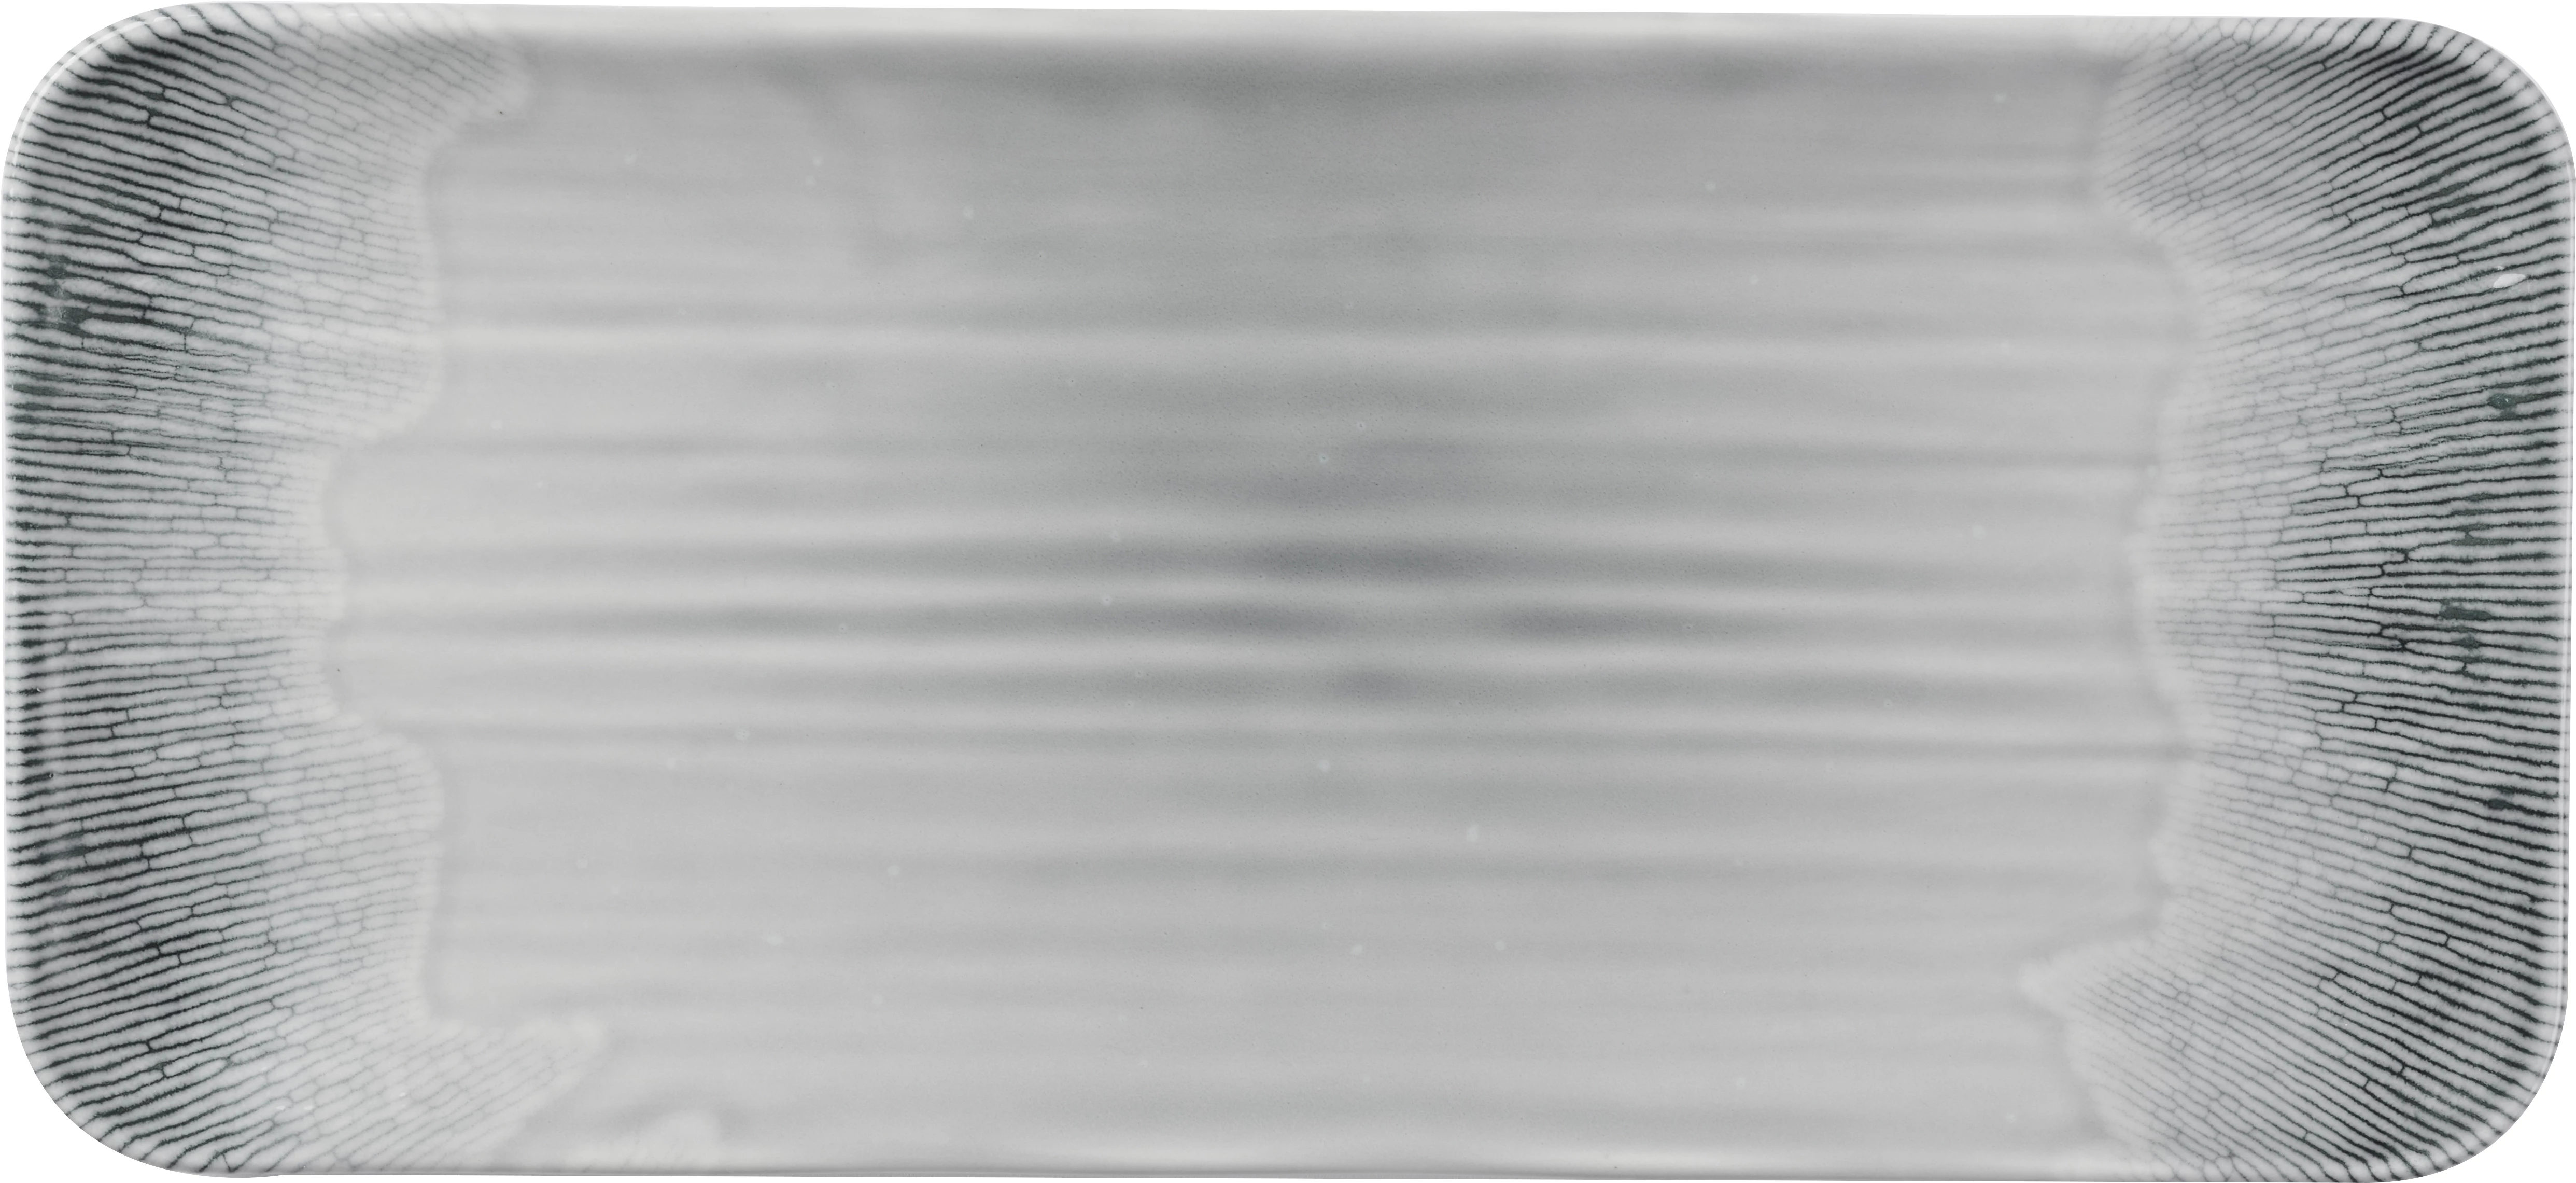 Dudson Harvest Flux fad, grå, 34,6 x 15,6 cm